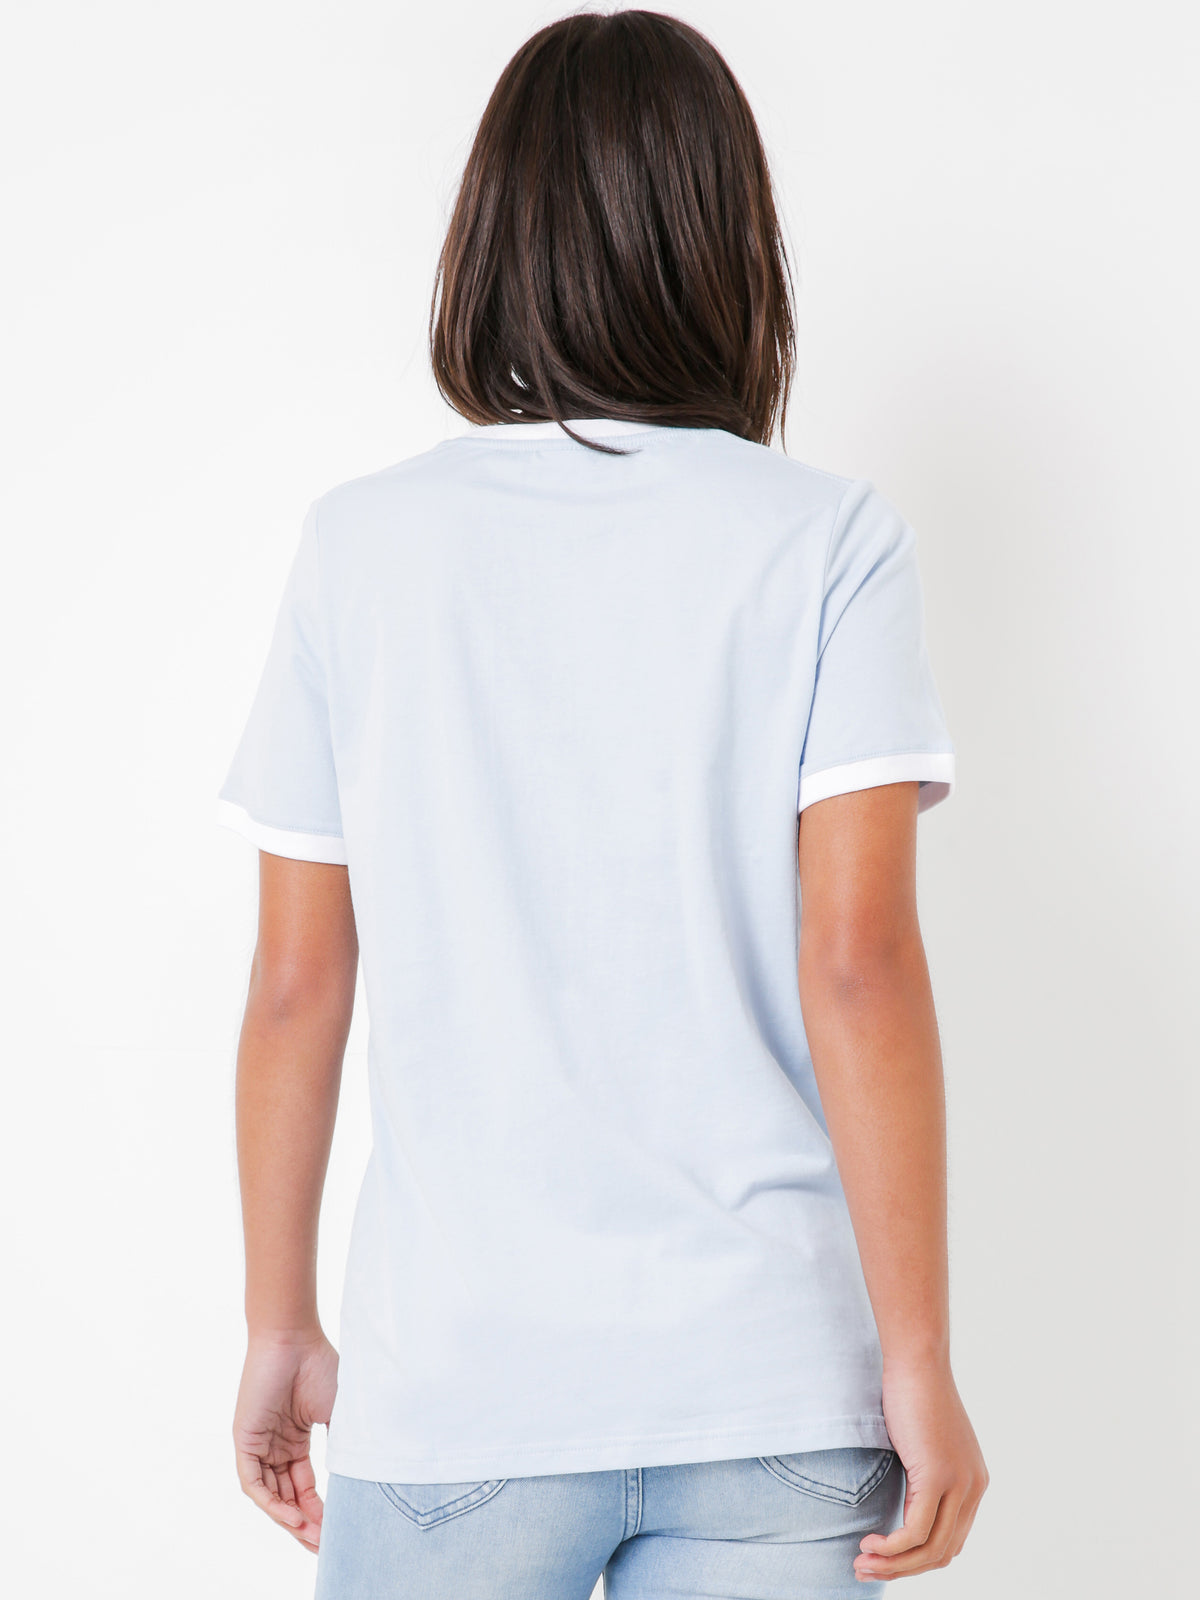 Selena T-Shirt in Pale Blue